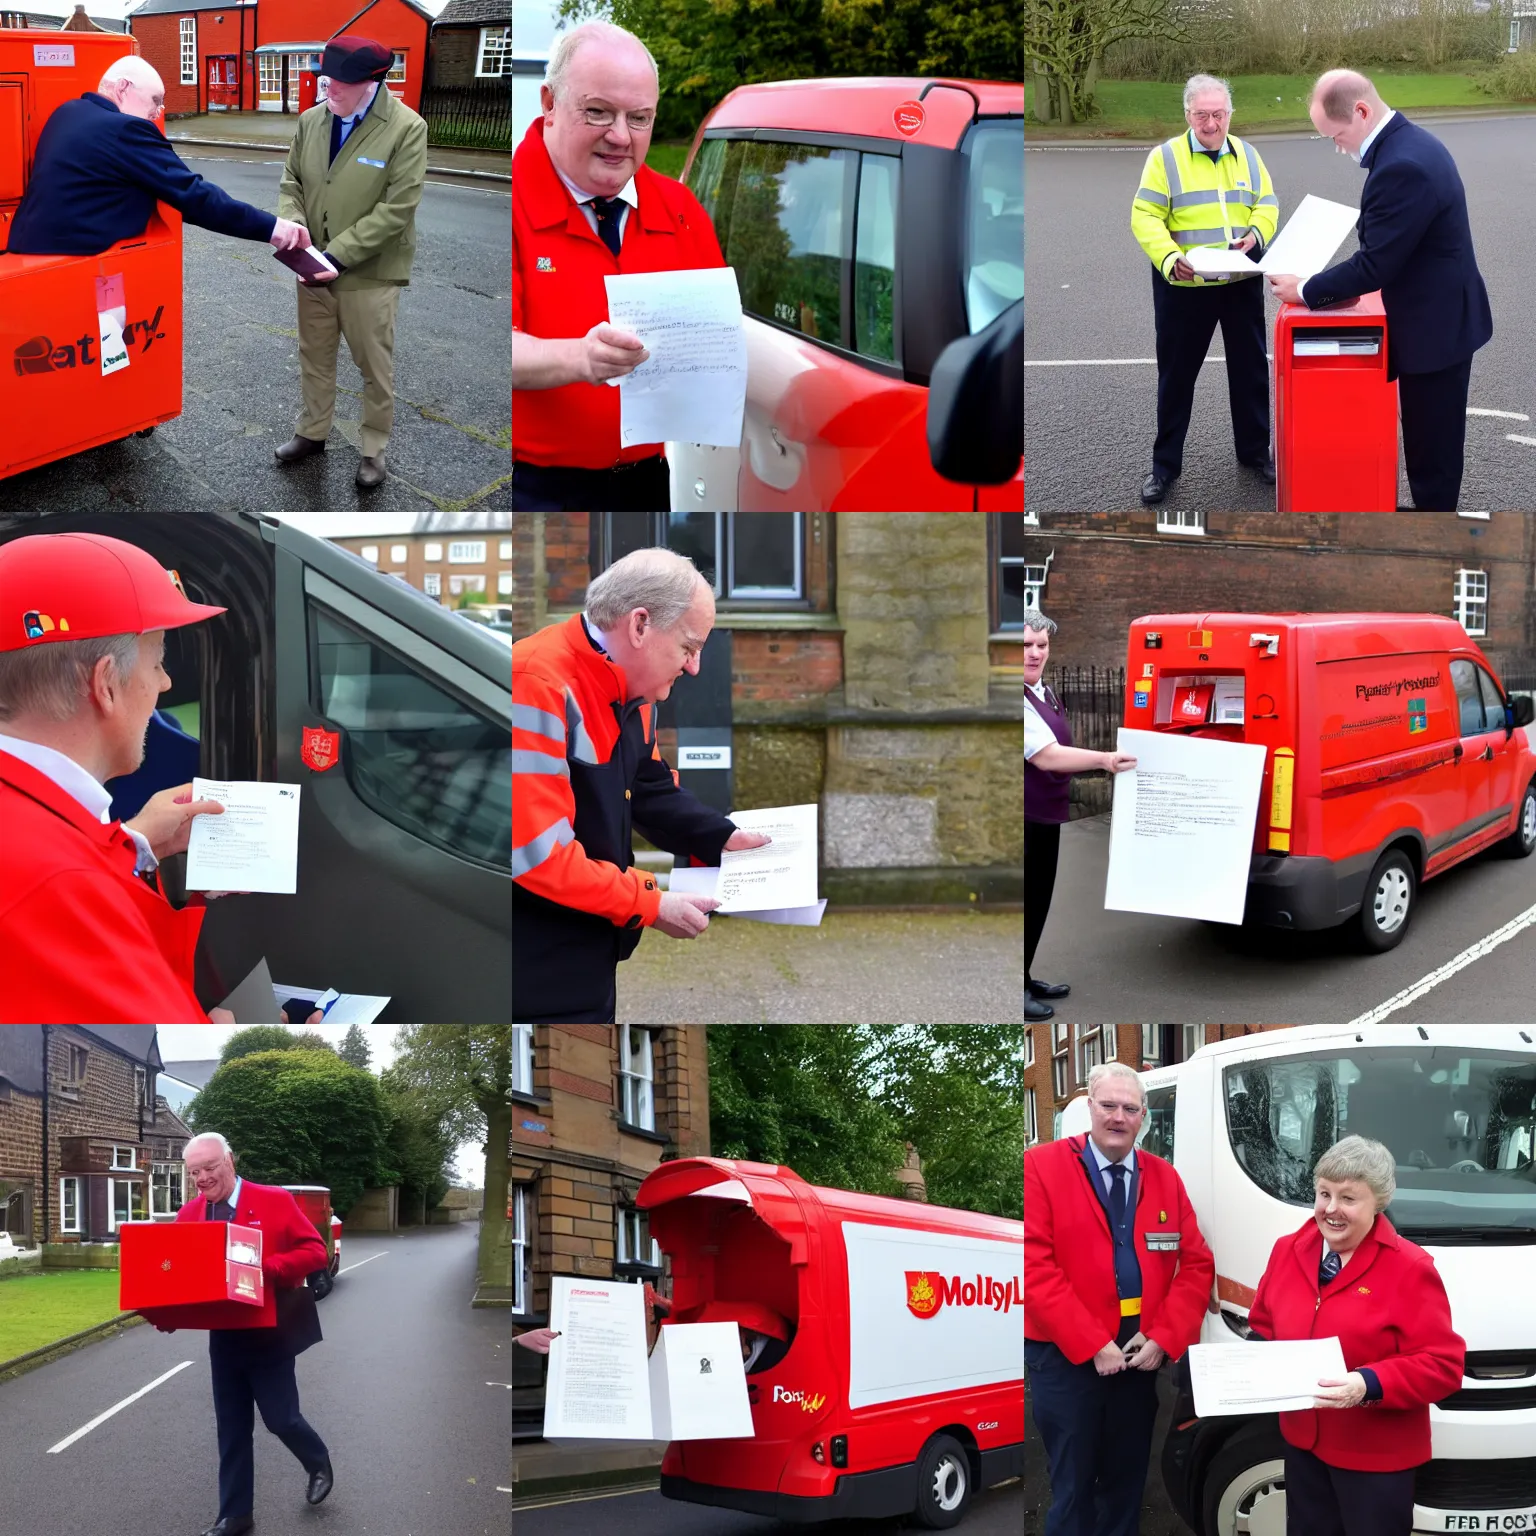 Prompt: royal mail pat posty delivering letters